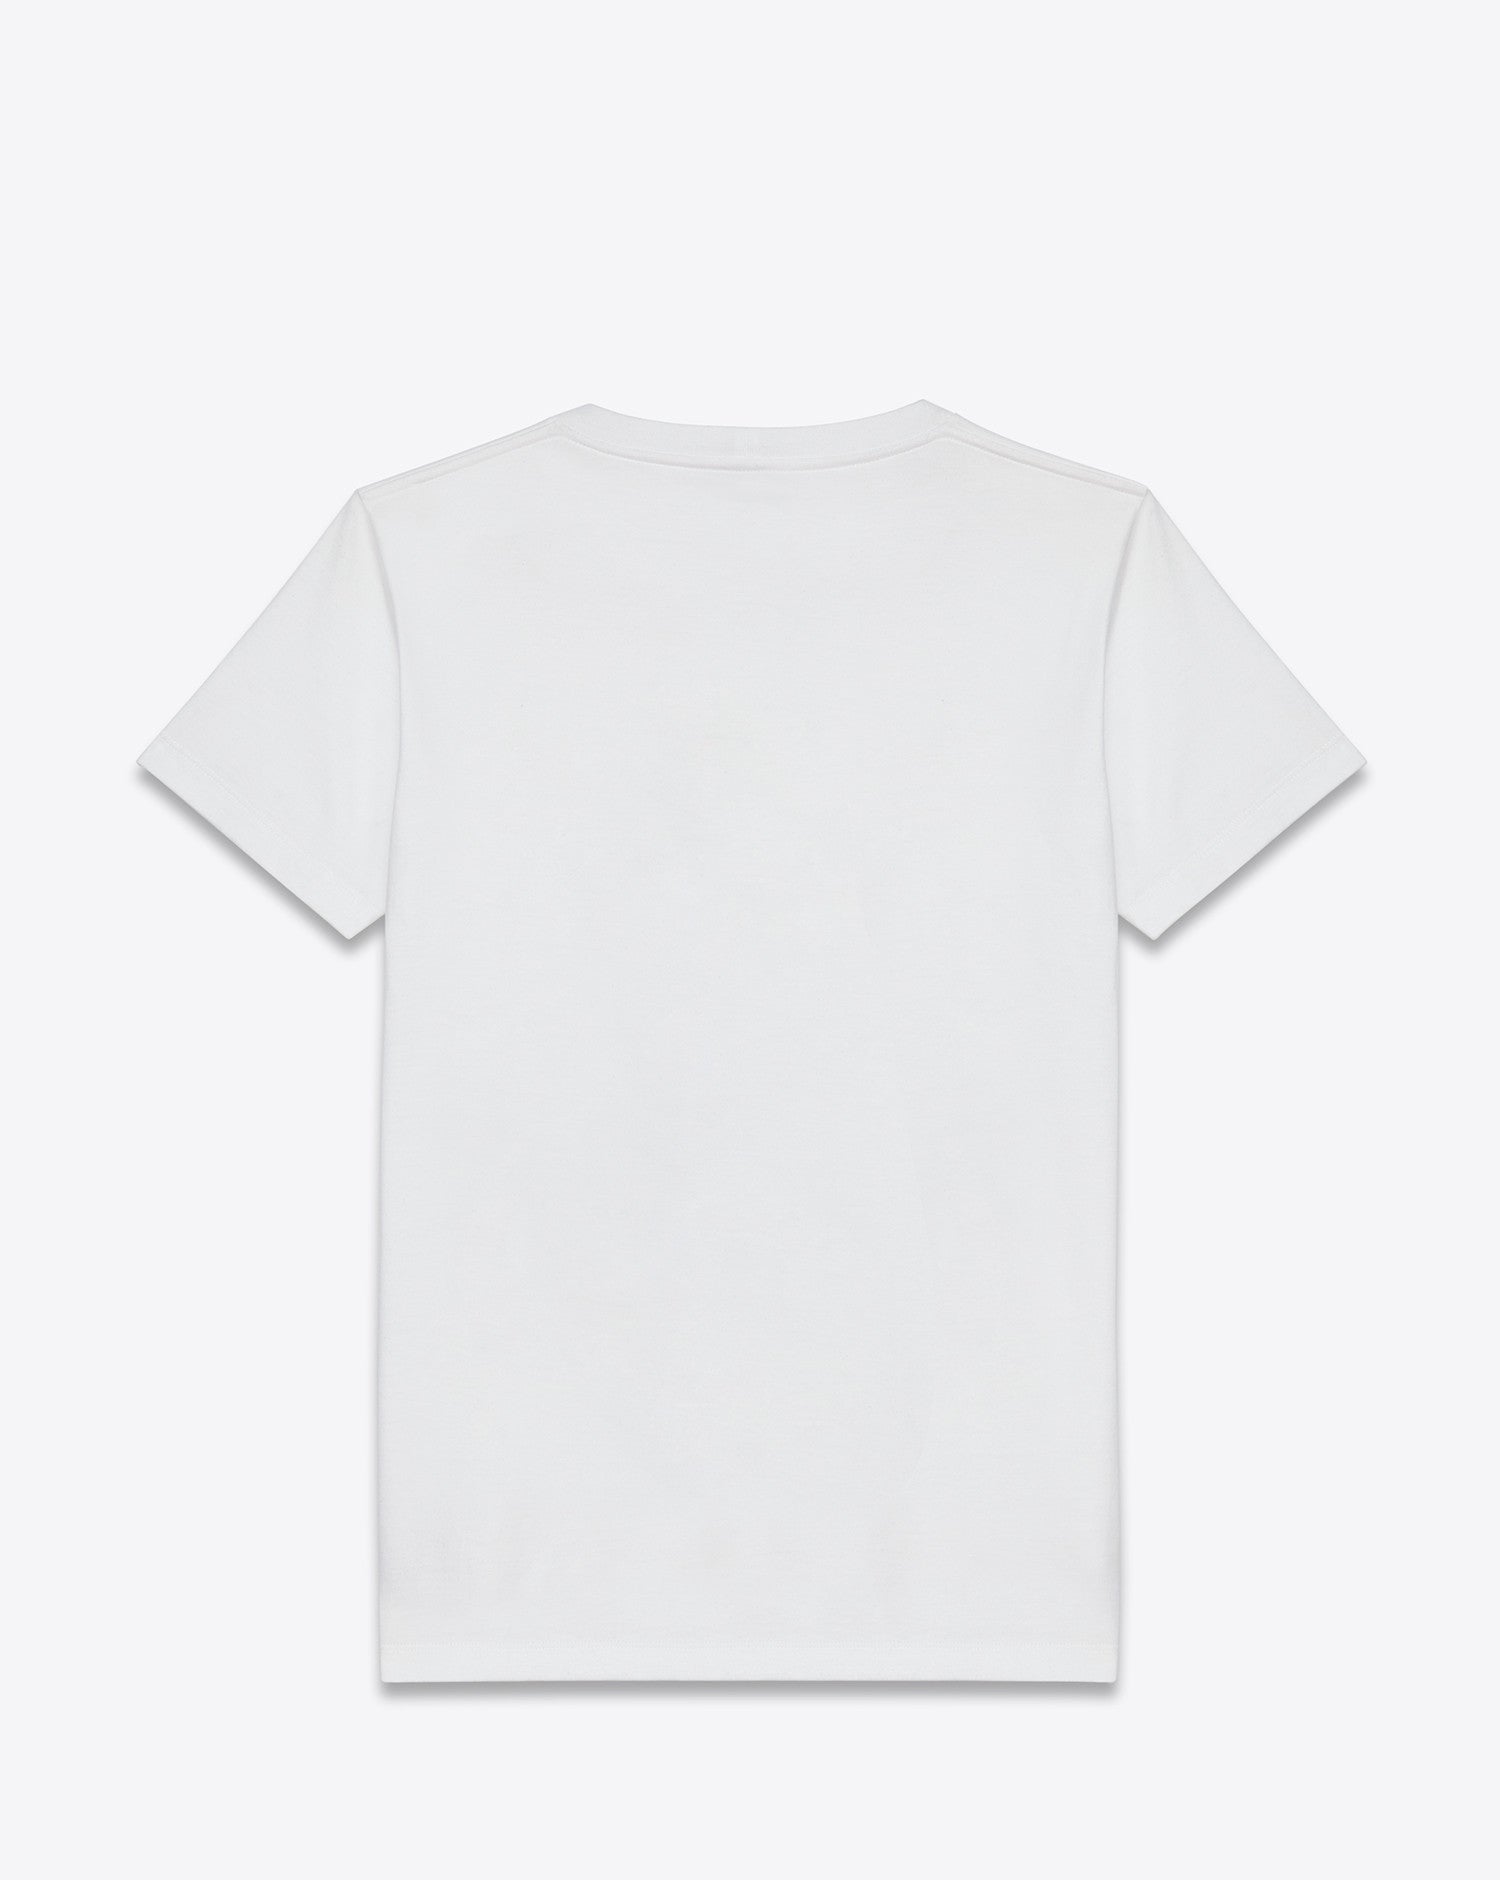 Wavy Baby T-Shirt White - DEMEANOIR - 1